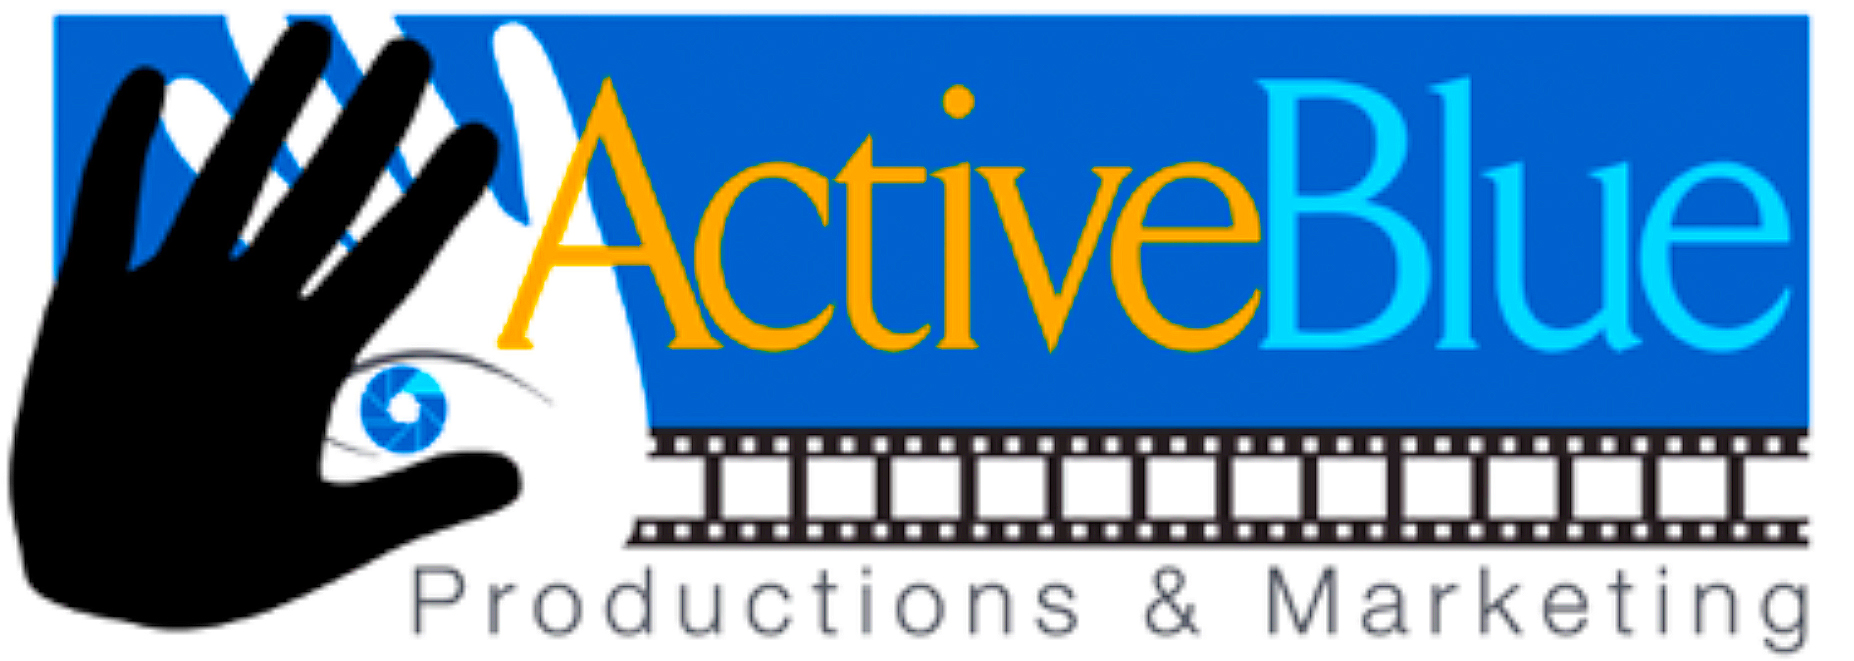 Active Blue Productions